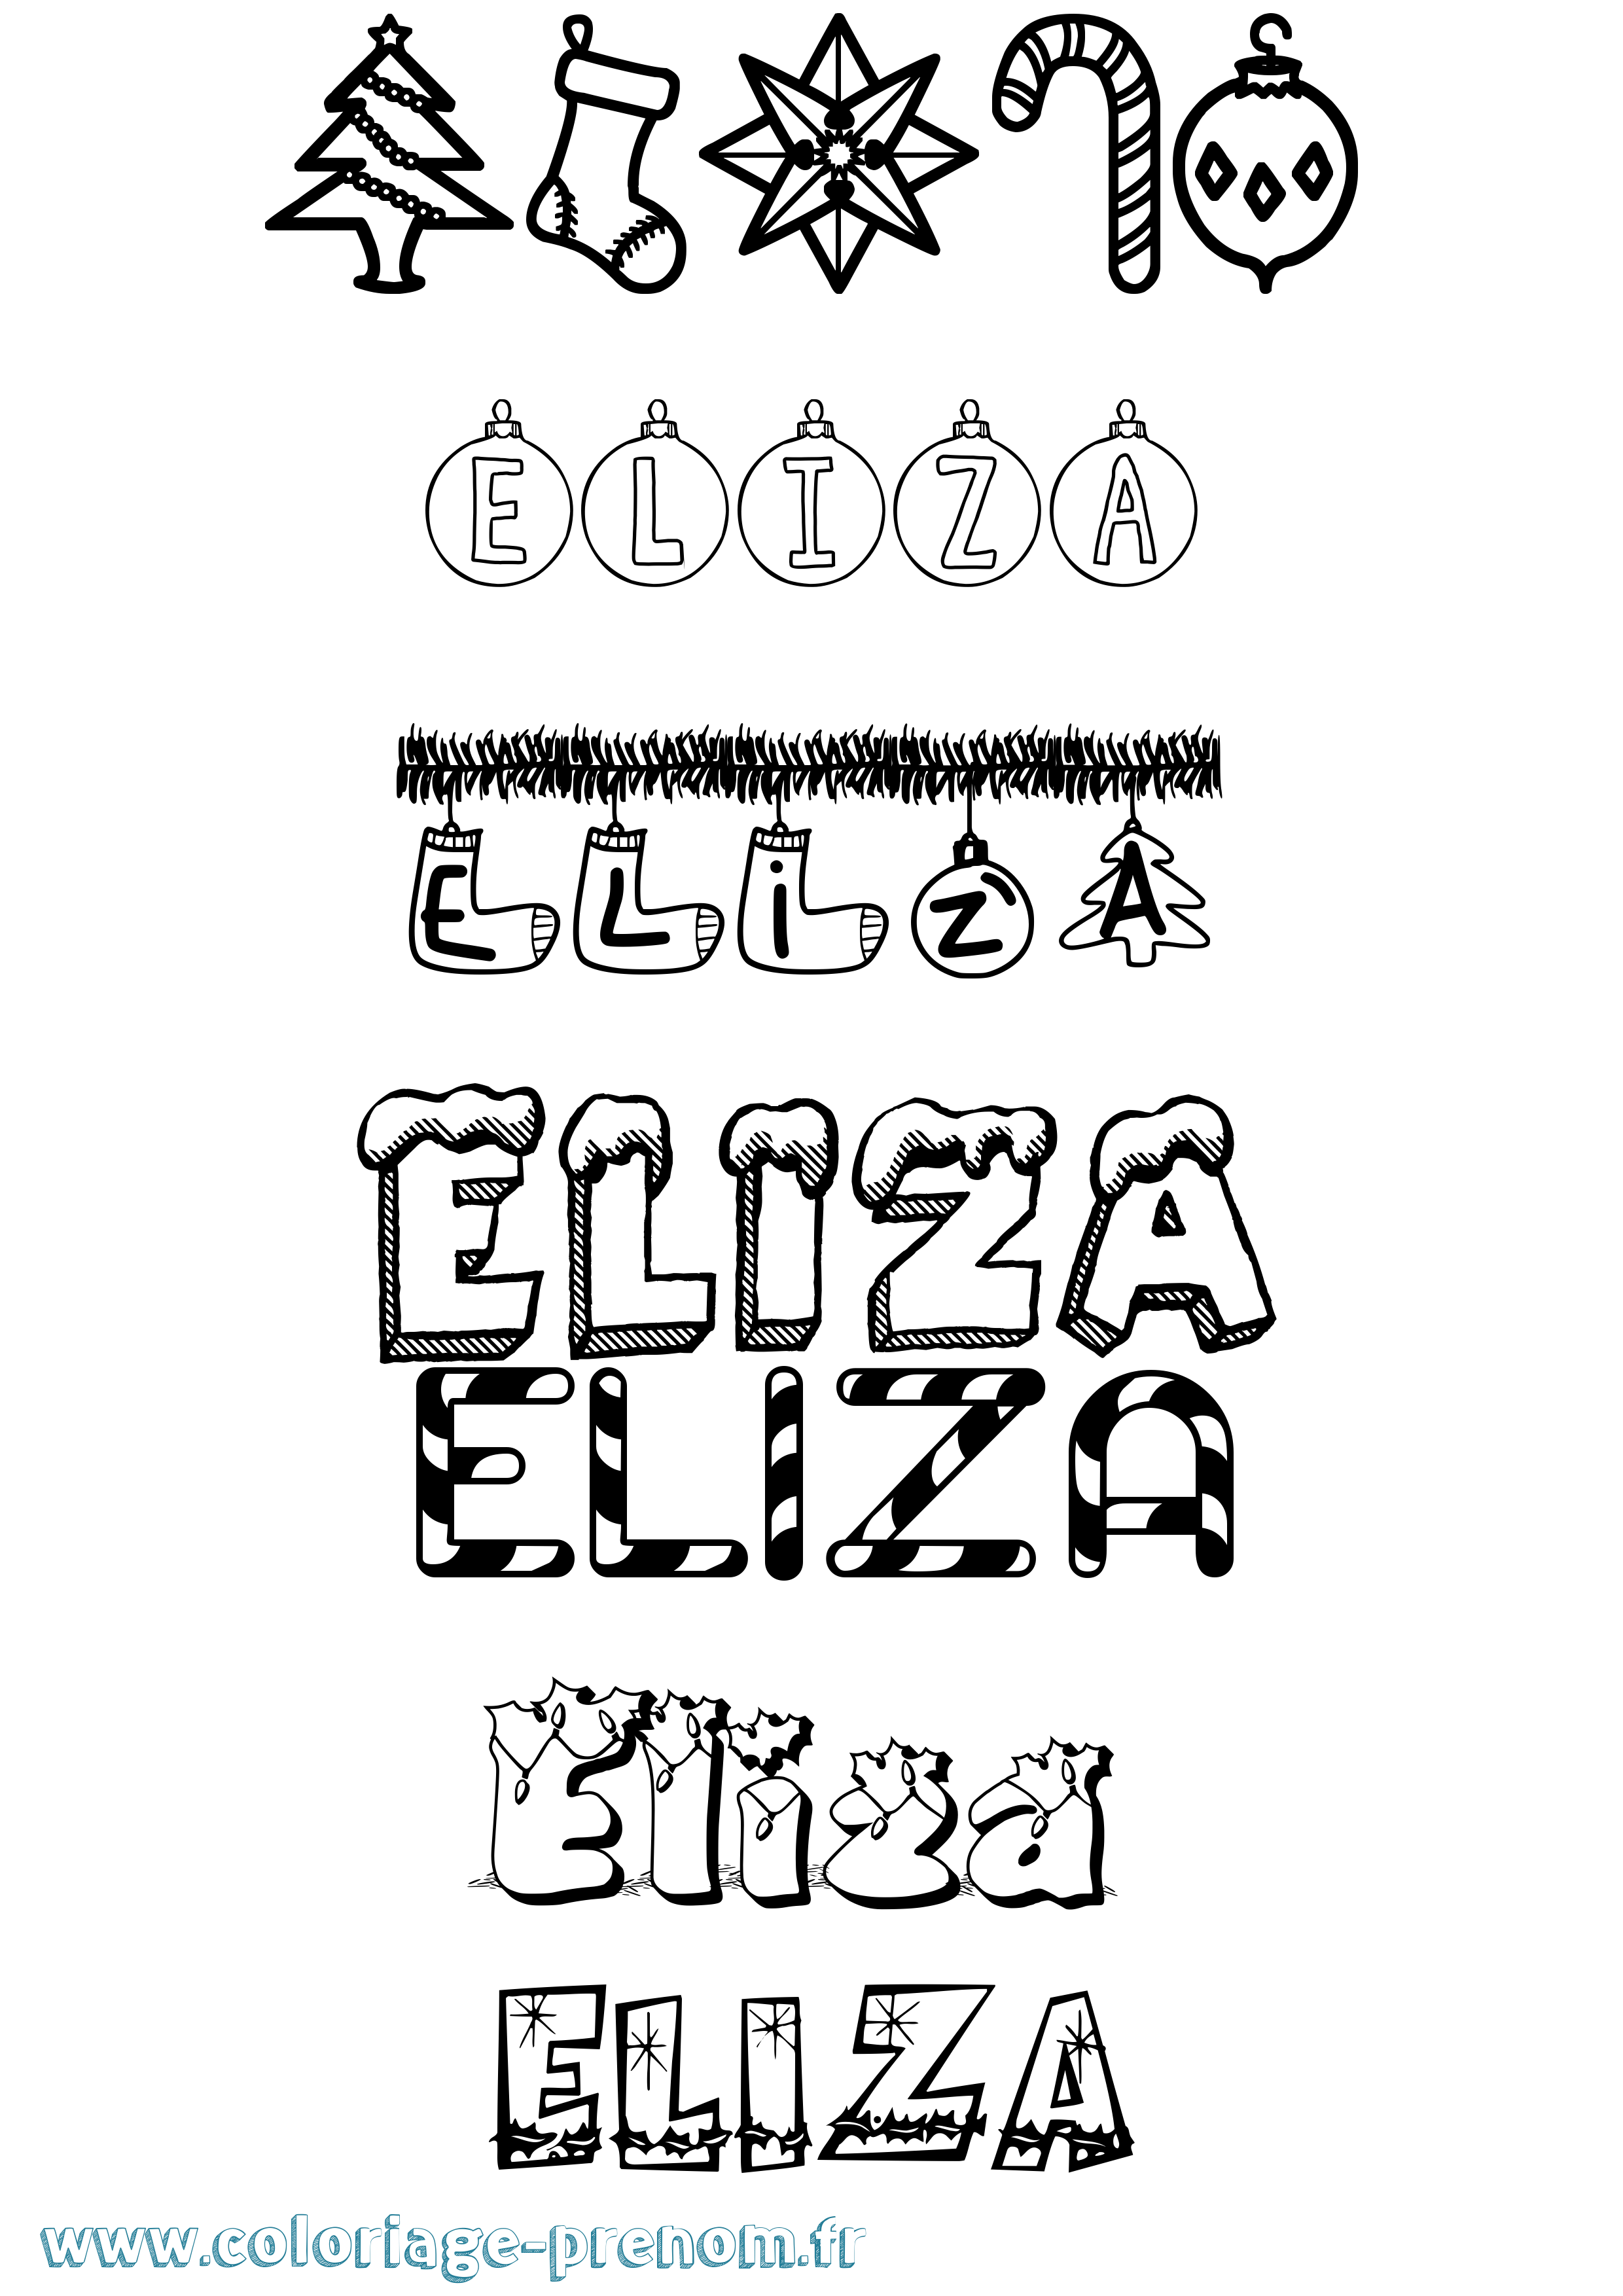 Coloriage prénom Eliza